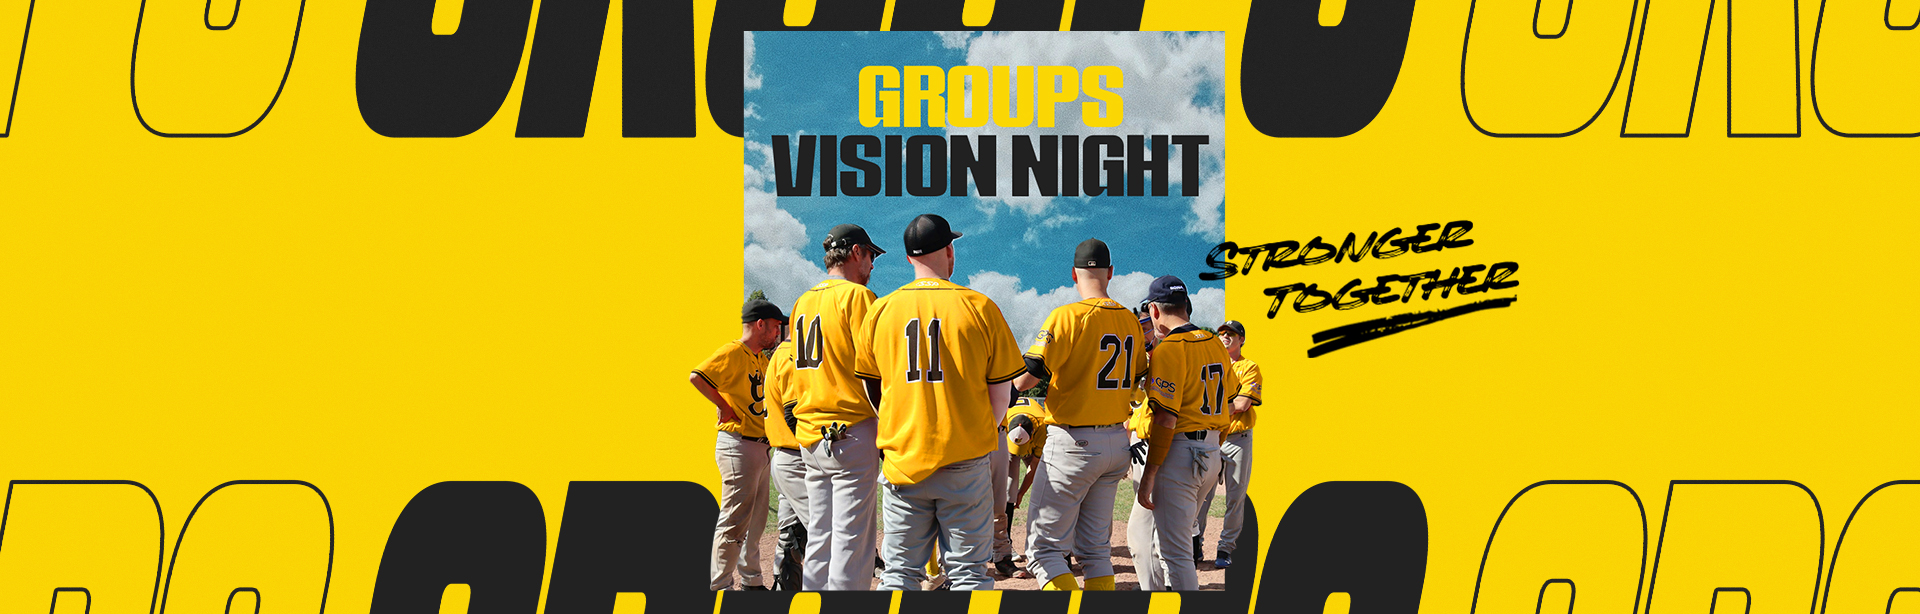 Groups Vision Night